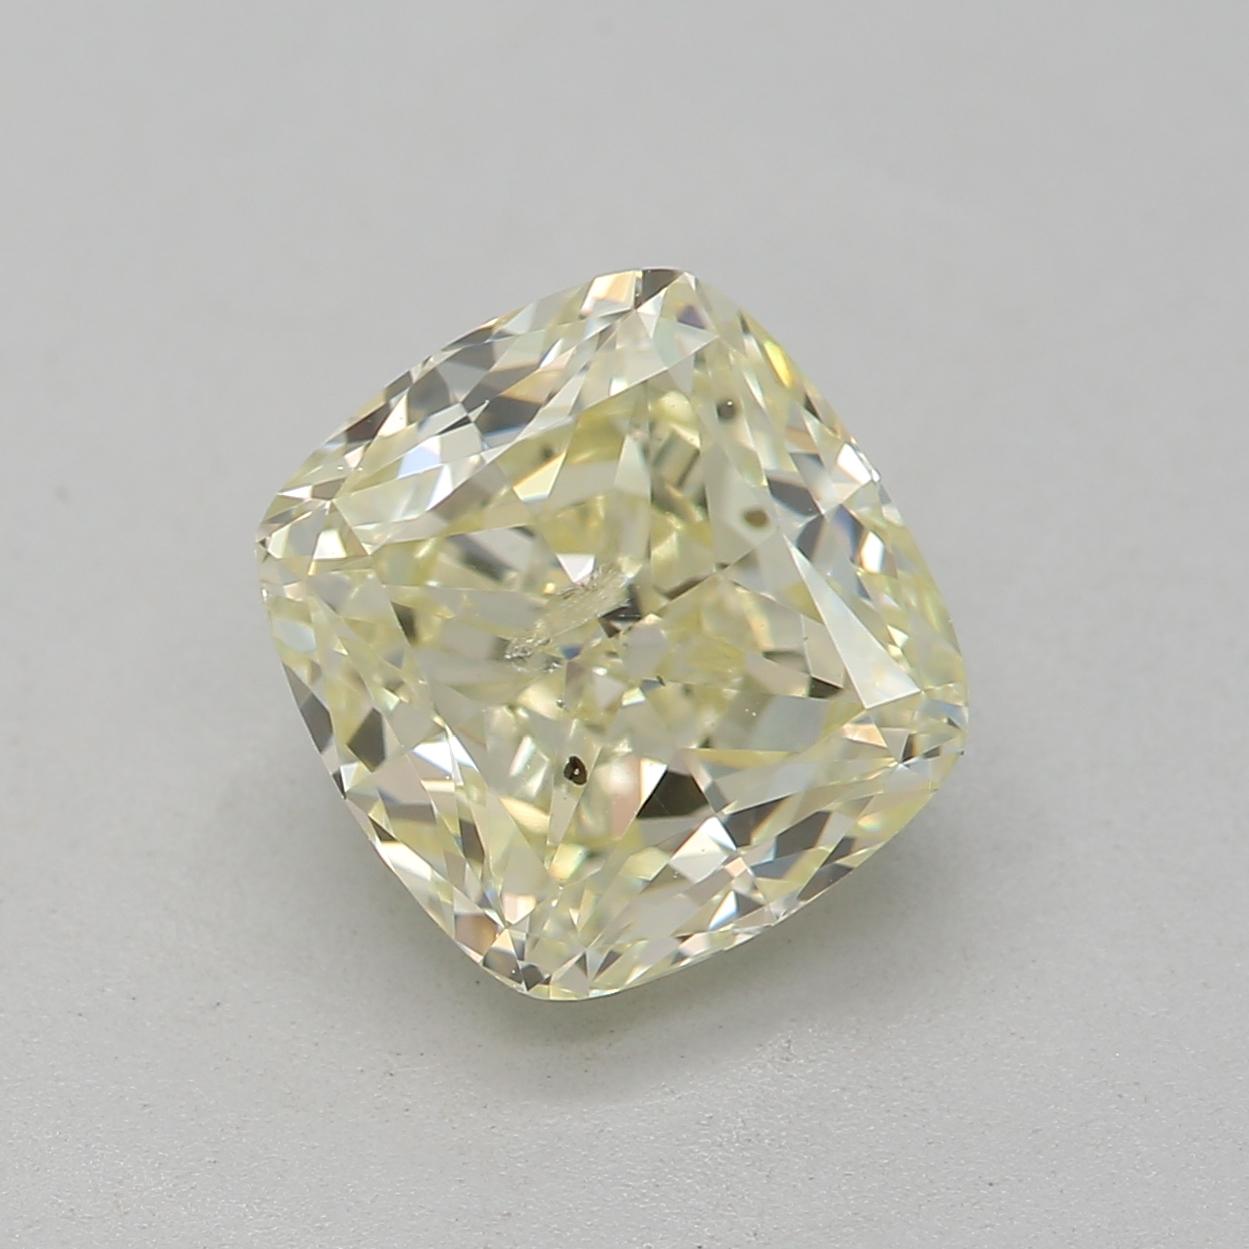 ***100% NATURAL FANCY COLOUR DIAMOND***

✪ Diamond Details ✪

➛ Shape: Cushion
➛ Colour Grade: W-X range, Light Yellow
➛ Carat: 1.61
➛ GIA Certified 

^FEATURES OF THE DIAMOND^

This 1.61 carat light yellow diamond typically exhibits a pale yellow